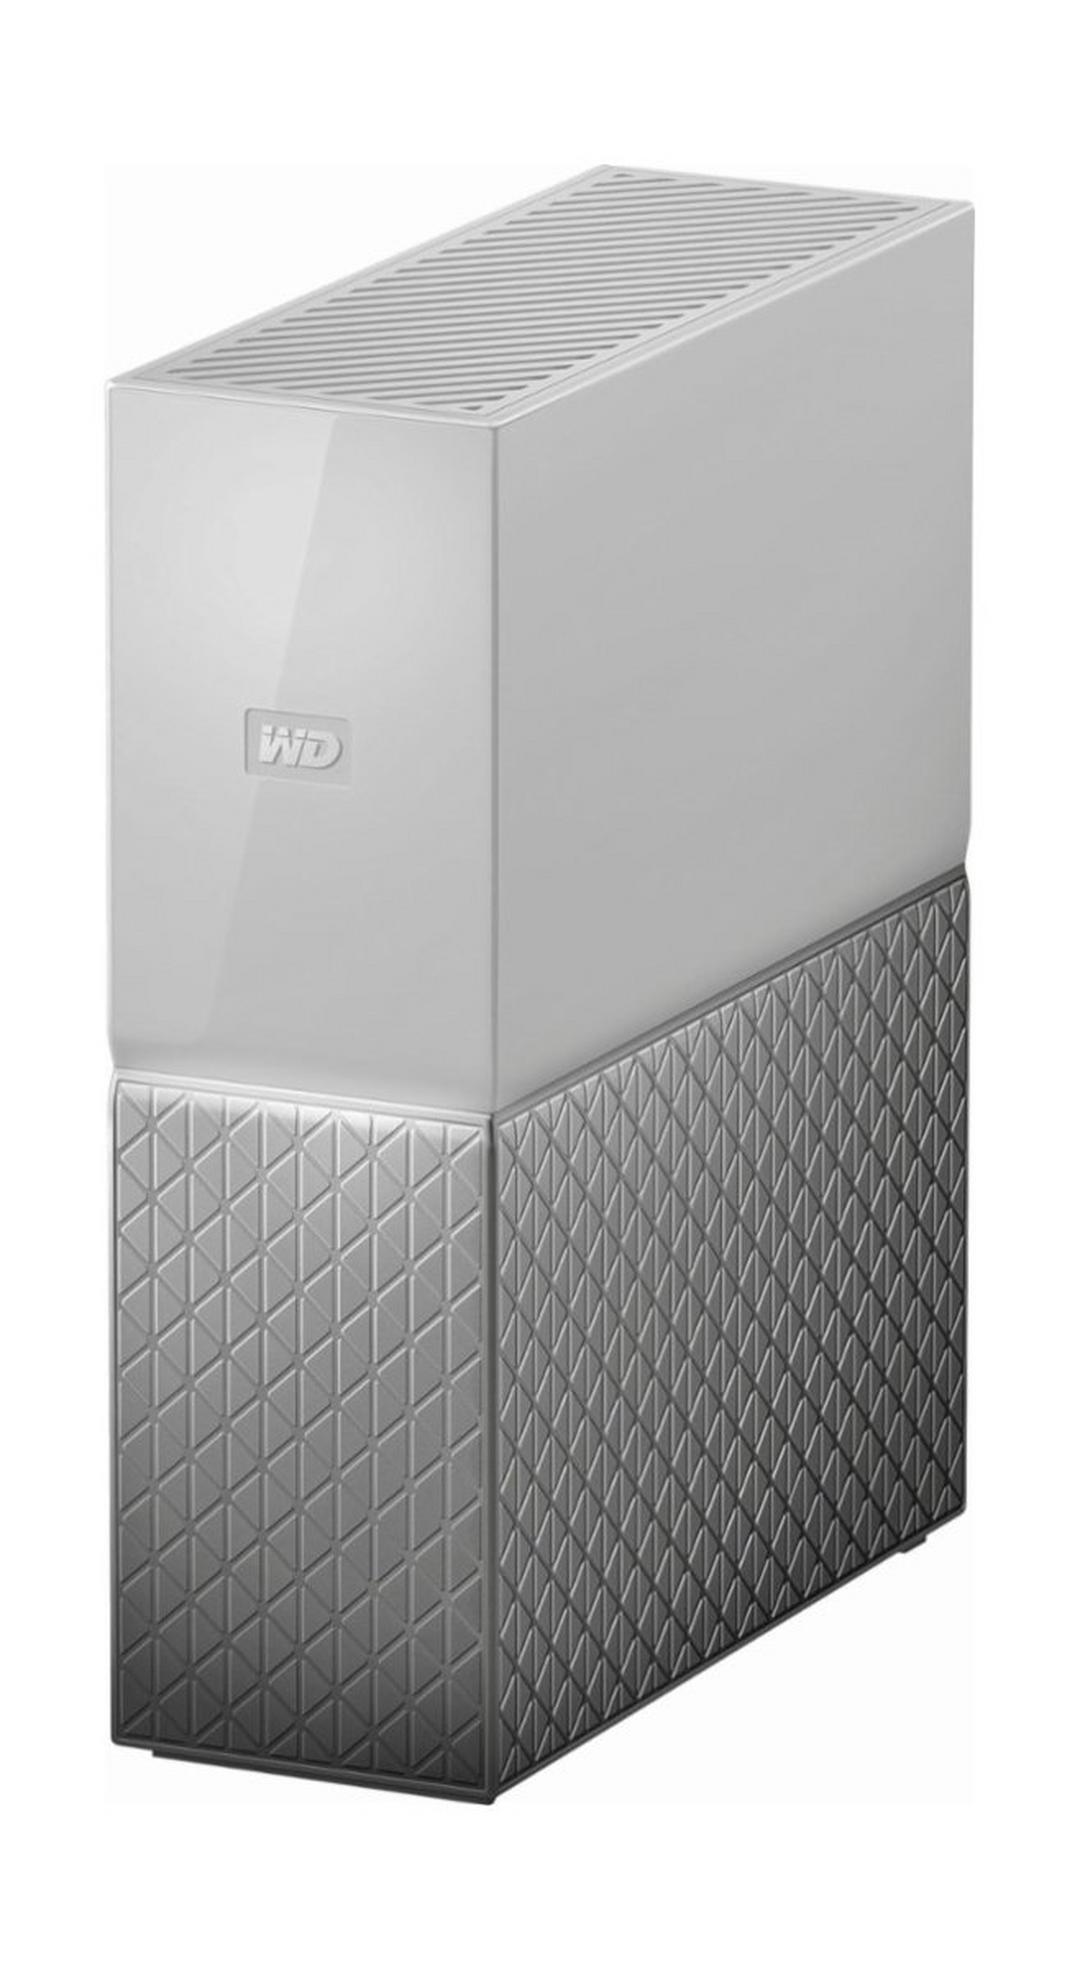 Western Digital 6TB MyCloud Home Hard Drive (WDBVXC0060HWT) - White